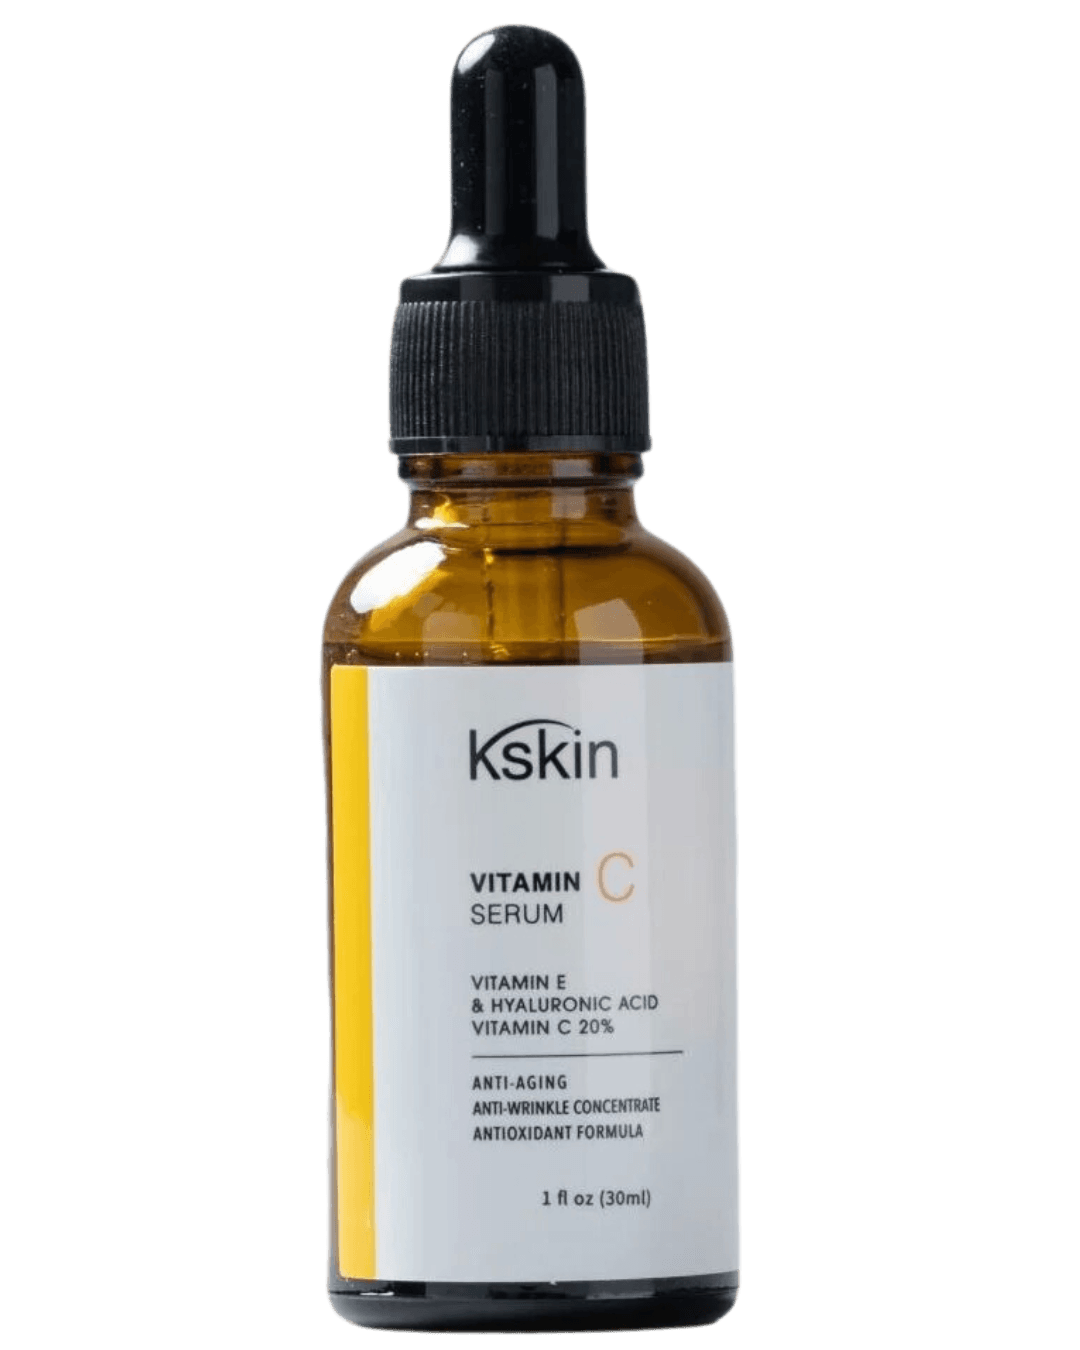 Kskin Vitamin C Serum